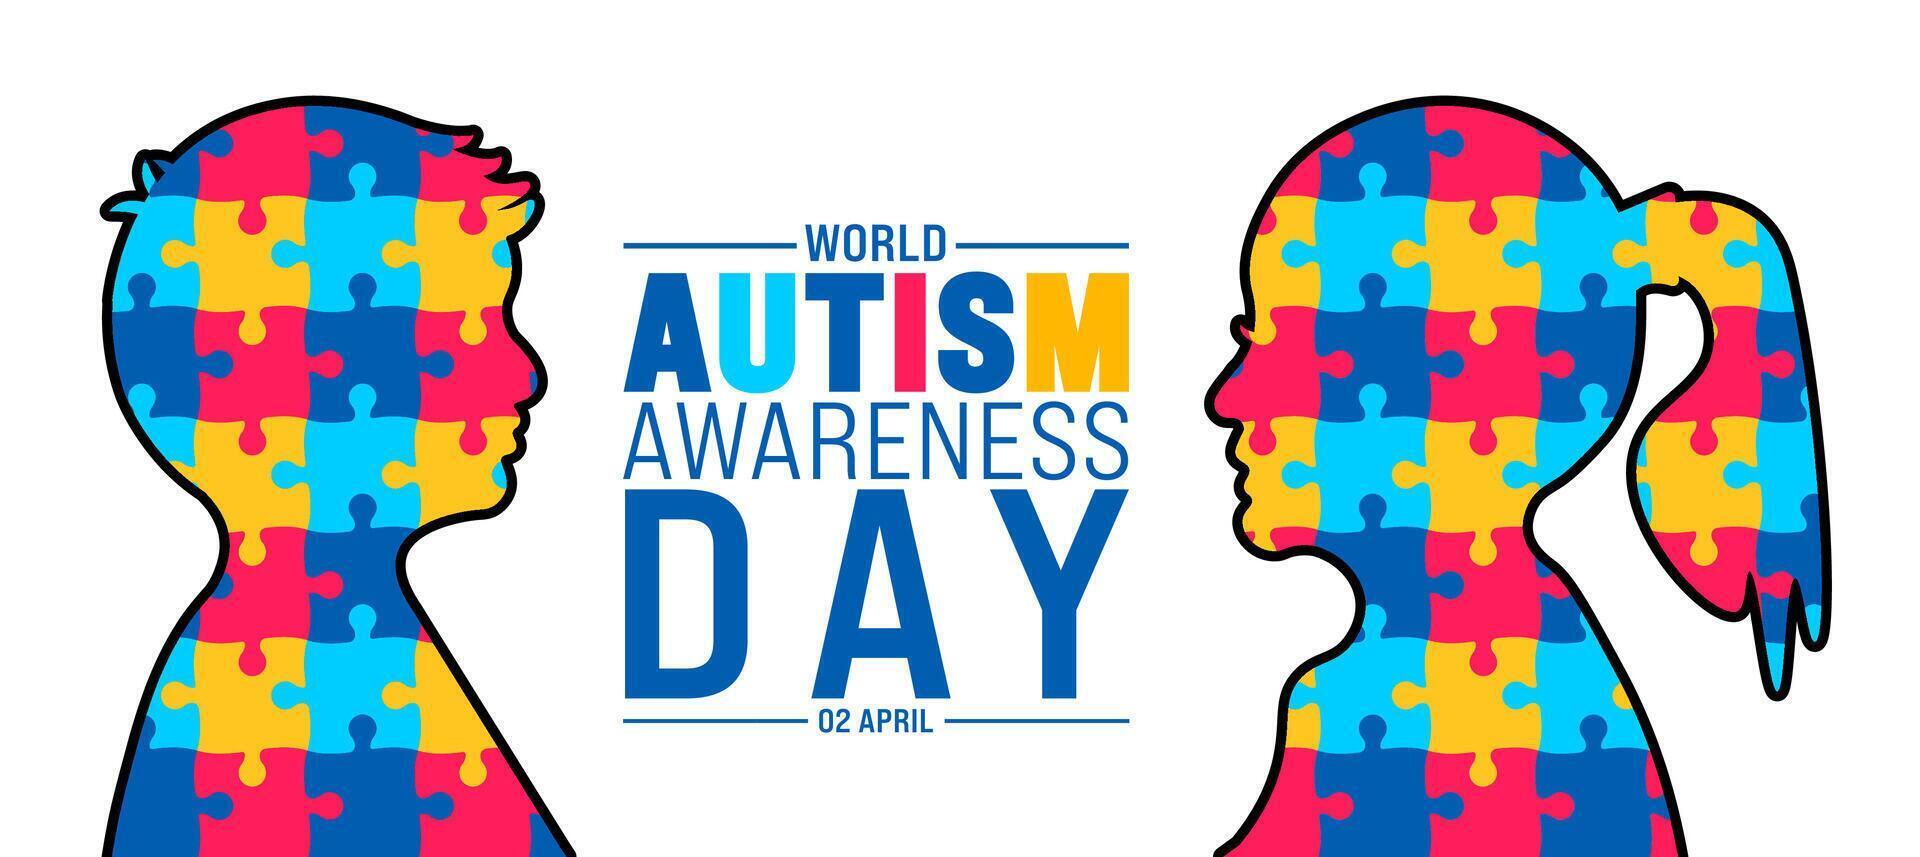 2 April Welt Autismus Bewusstsein Tag Junge und Mädchen Kind bunt Puzzle Muster Banner Design Vorlage. Vektor Illustration.